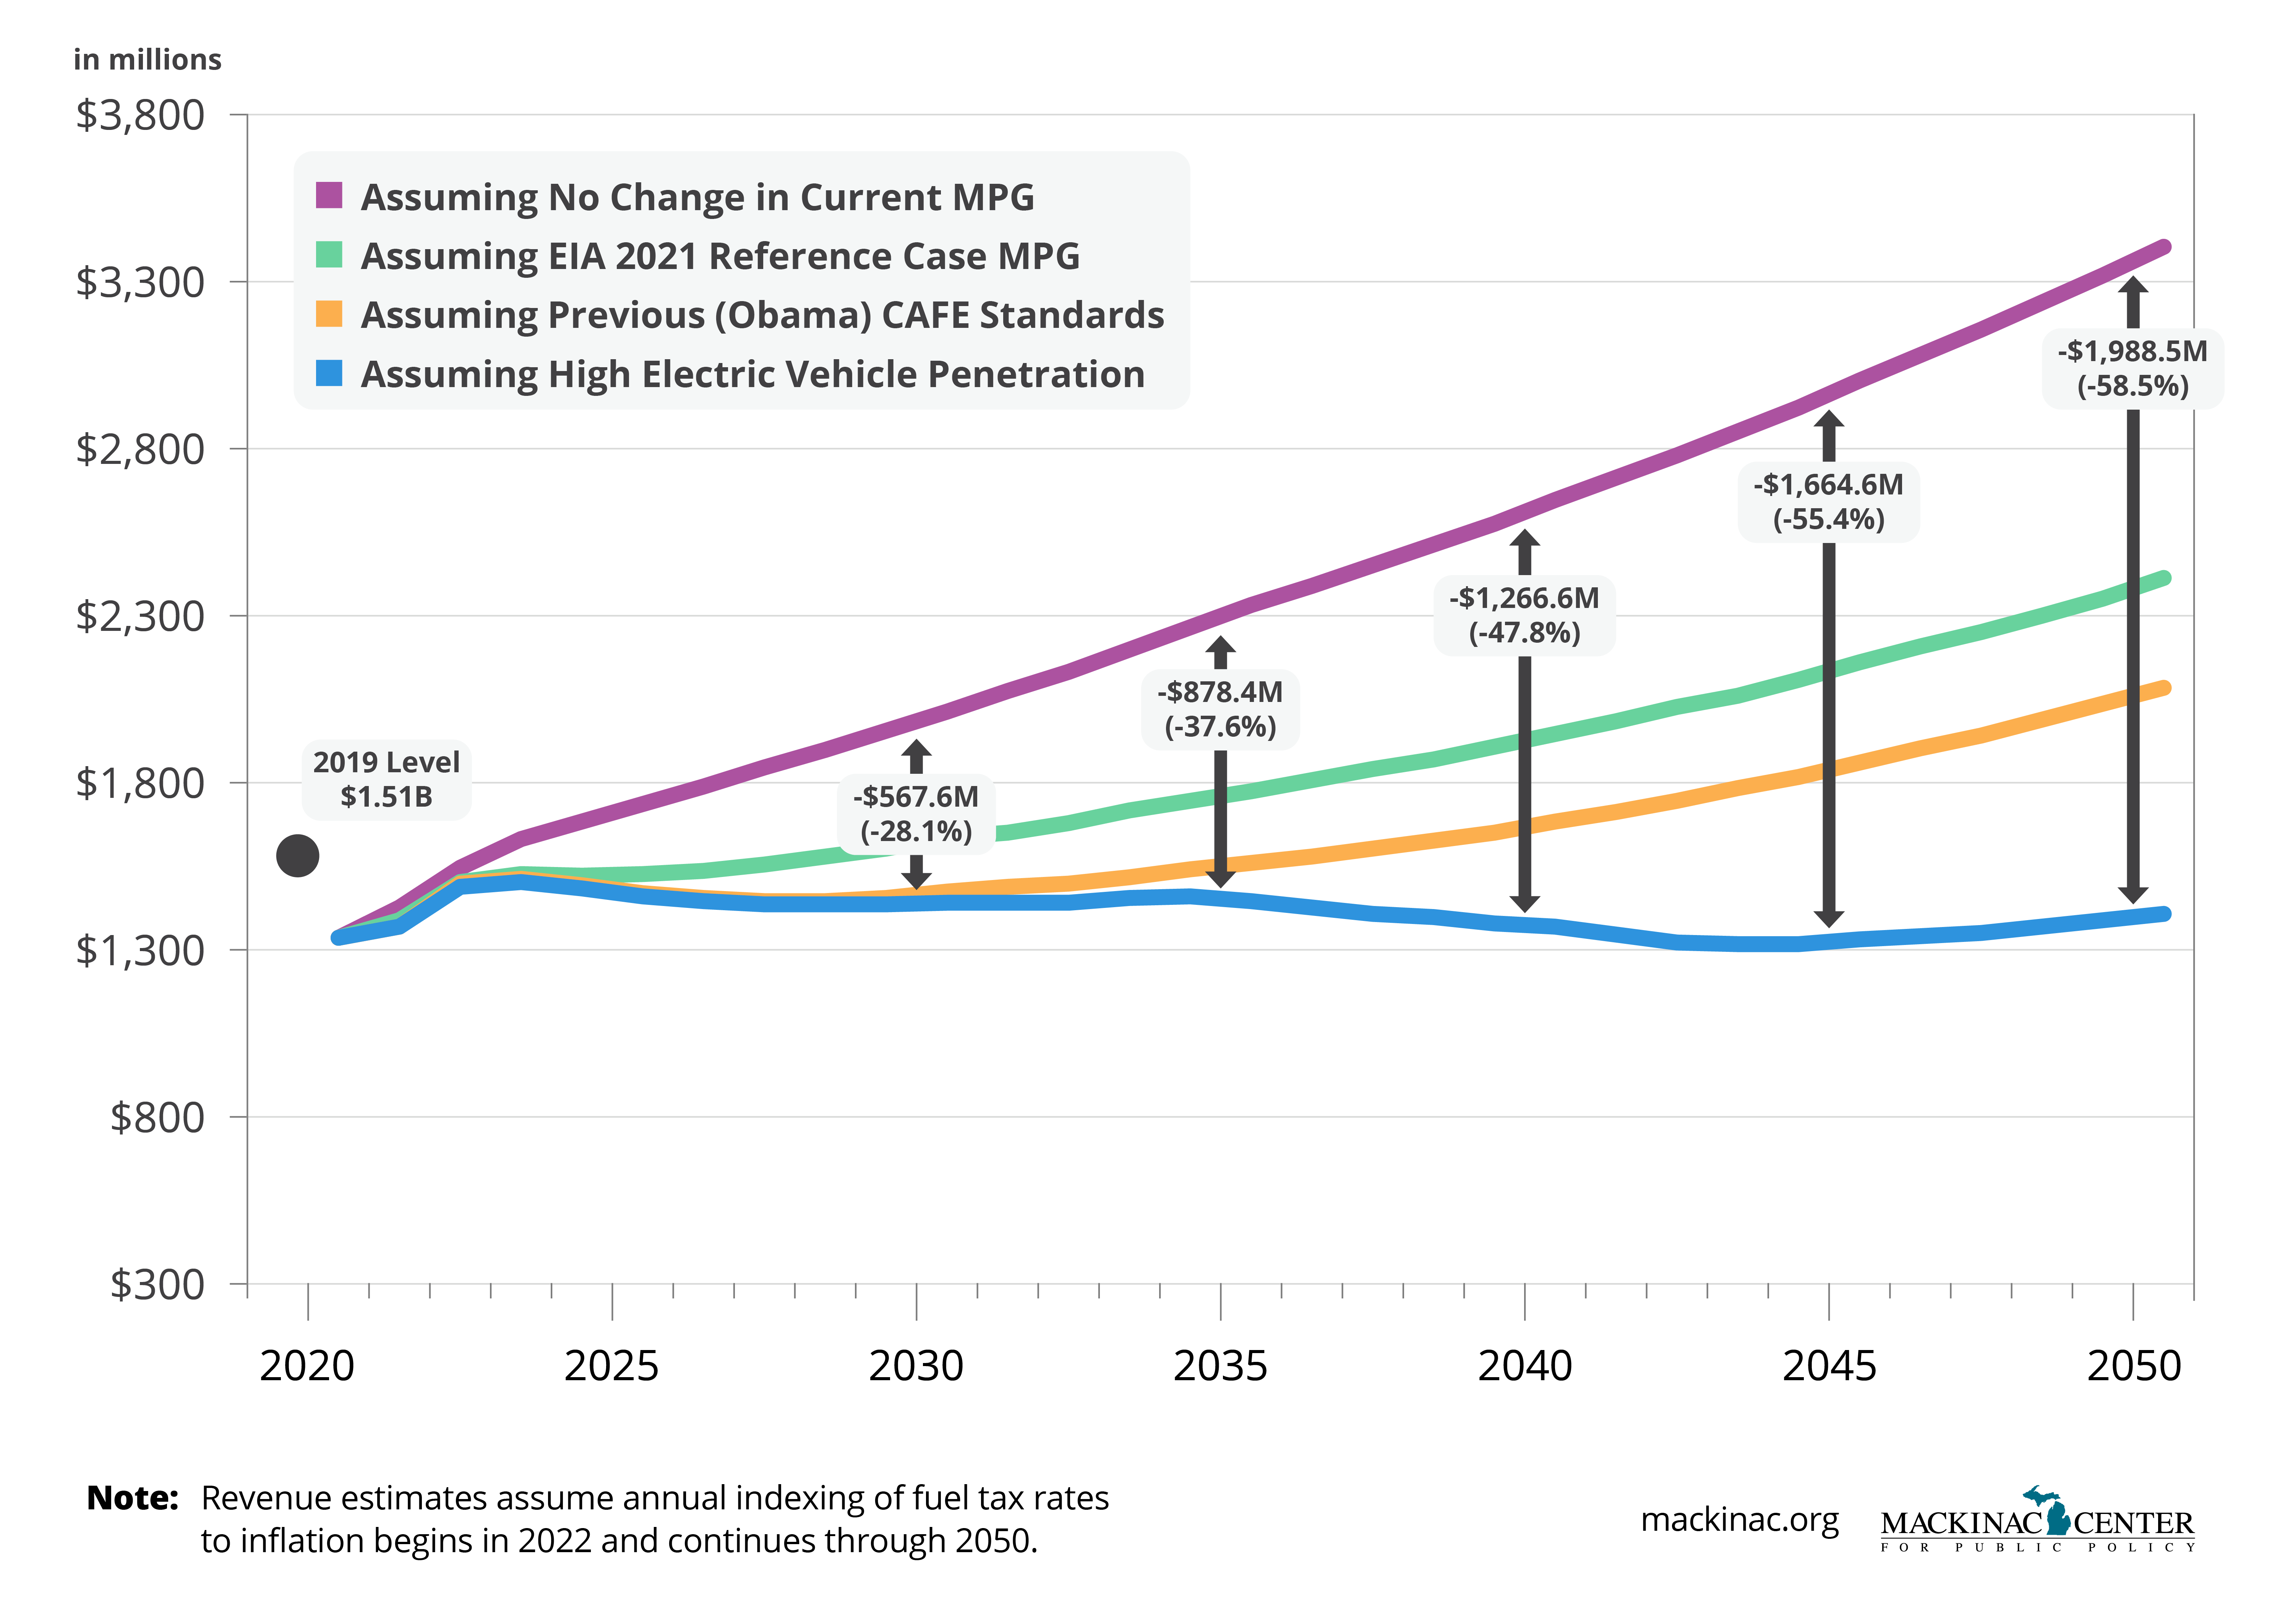 Graphic 5: Estimated Michigan Fuel Tax Revenue Under Alternative Scenarios, 2020-2050